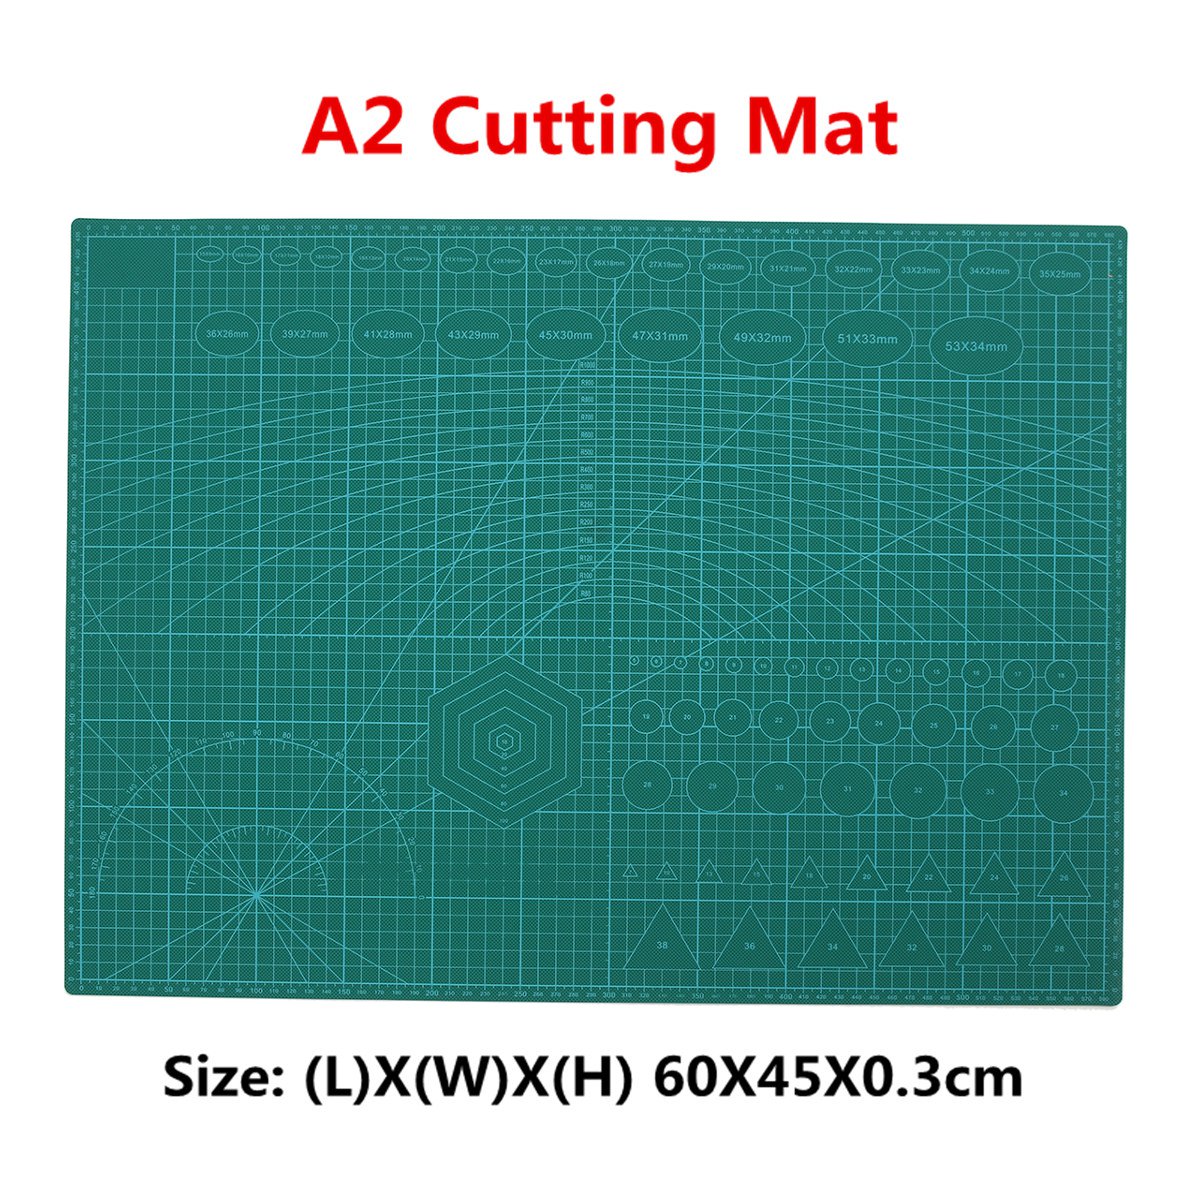 A2-PVC-Double-Printed-Self-Healing-Cutting-Mat-Craft-Quilting-Scrapbooking-Board-1163235-1